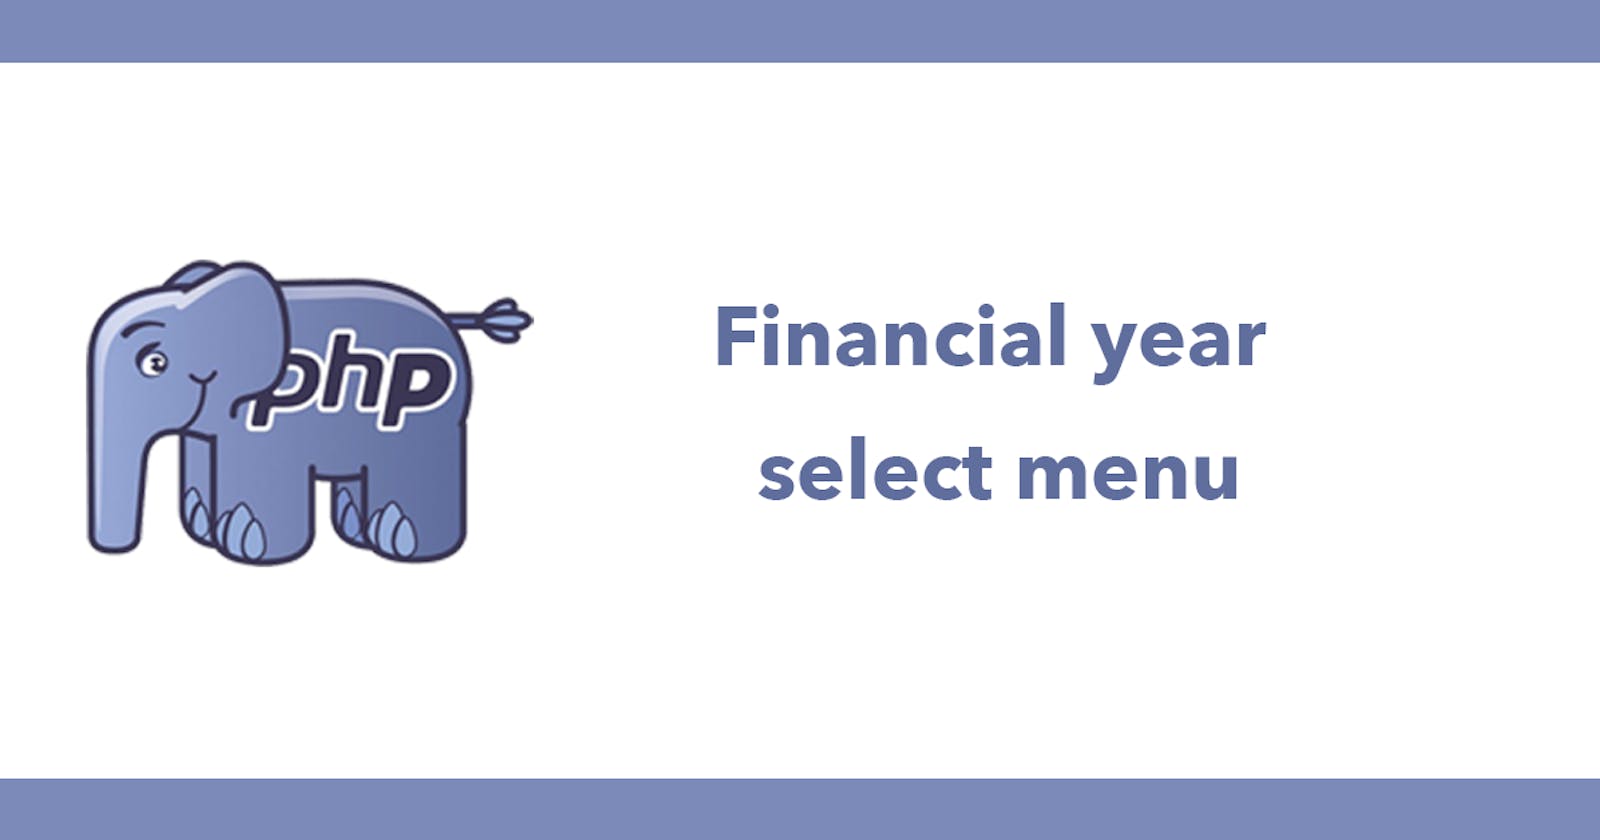 Financial year select menu